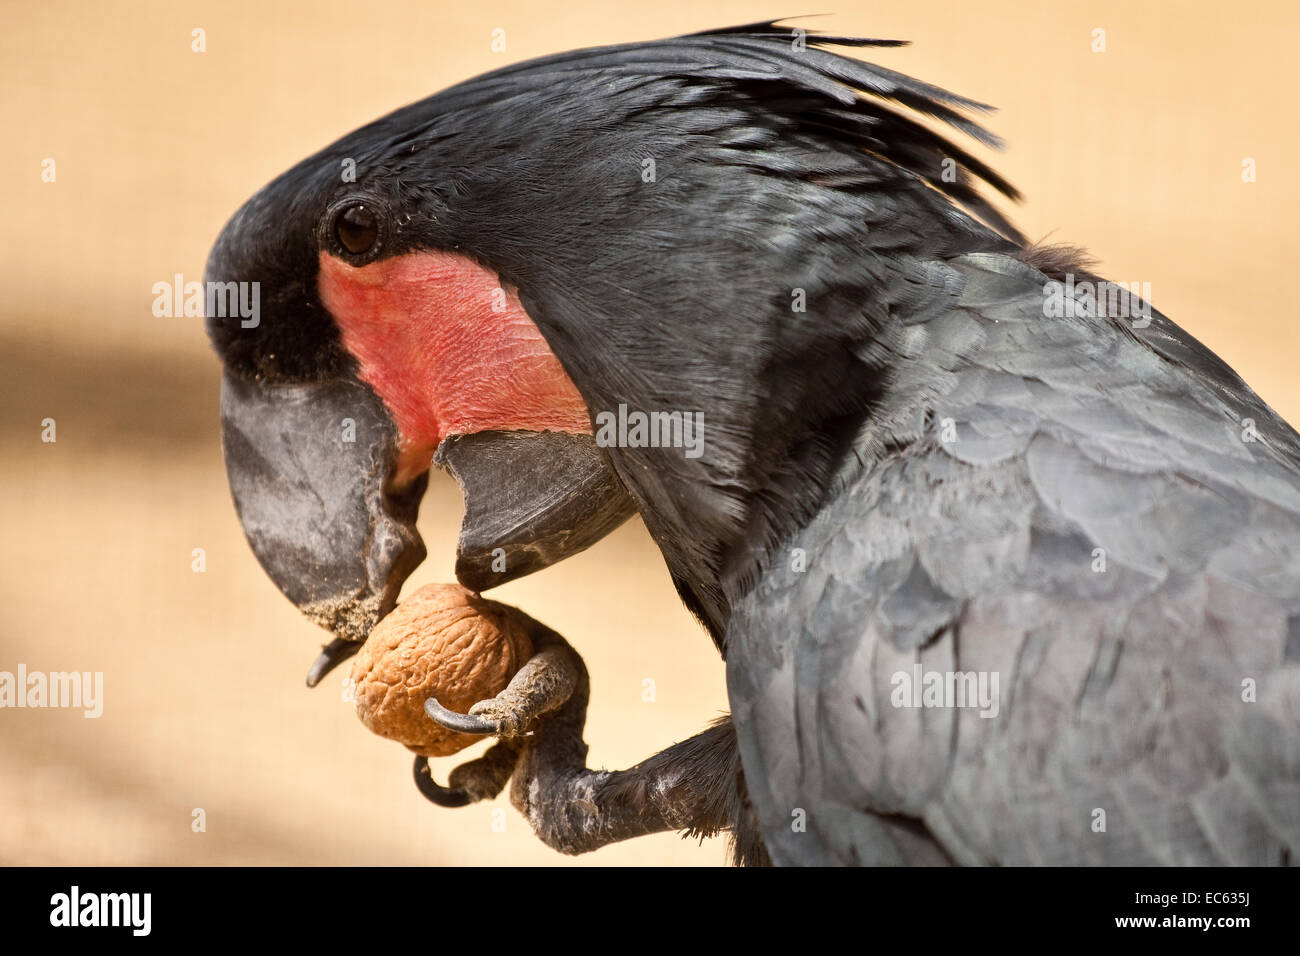 palm cockatoo Probosciger aterrimus Stock Photo